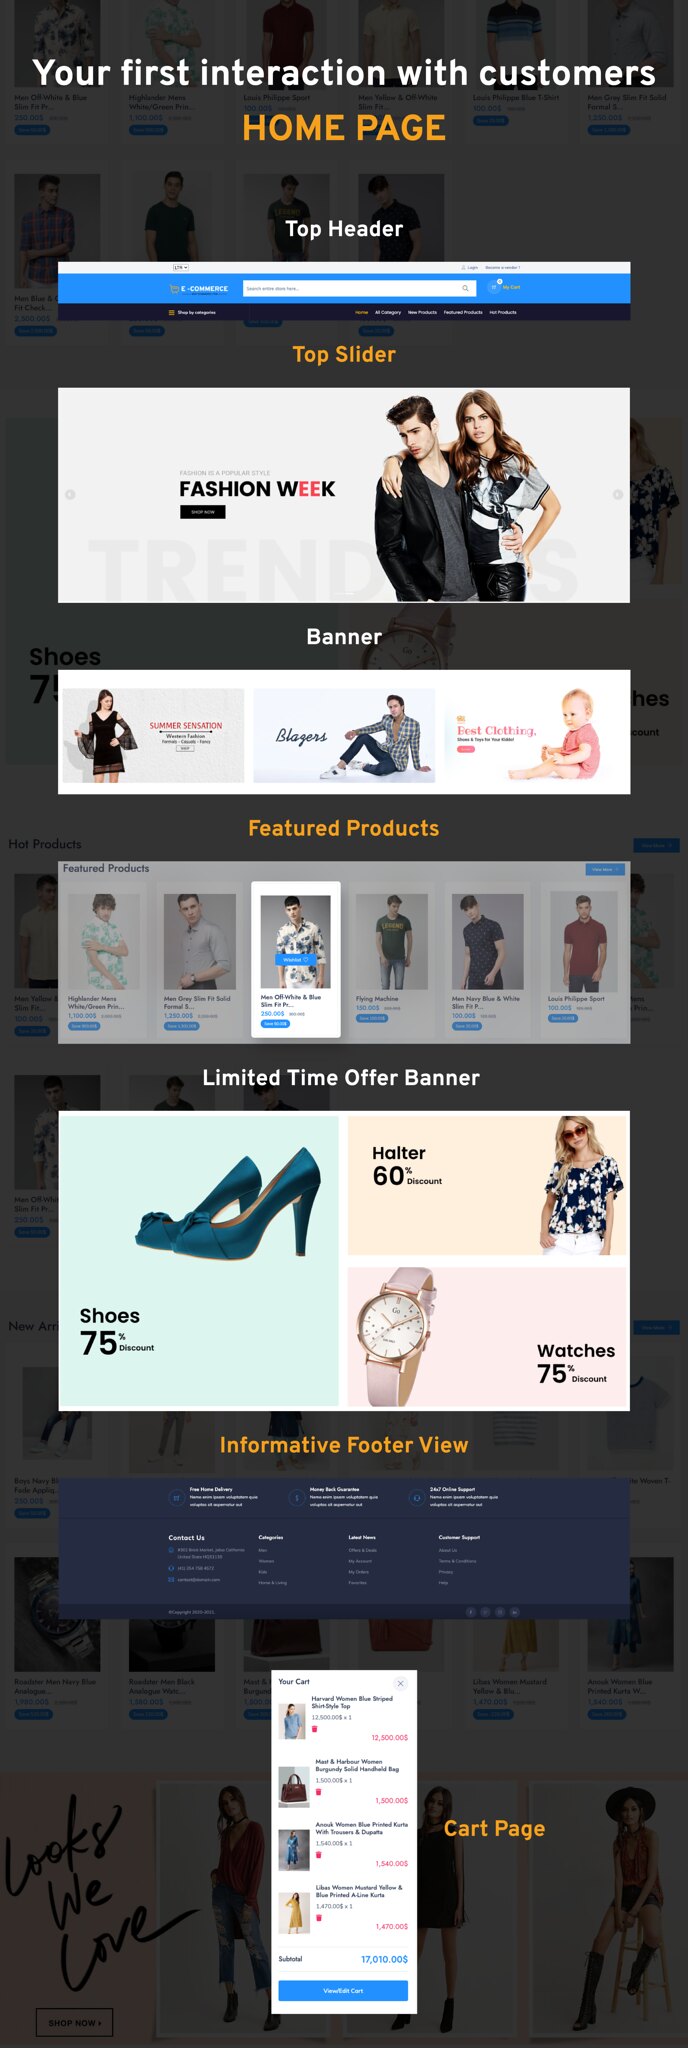 eCommerce - Multi vendor ecommerce Website with Admin panel - 5